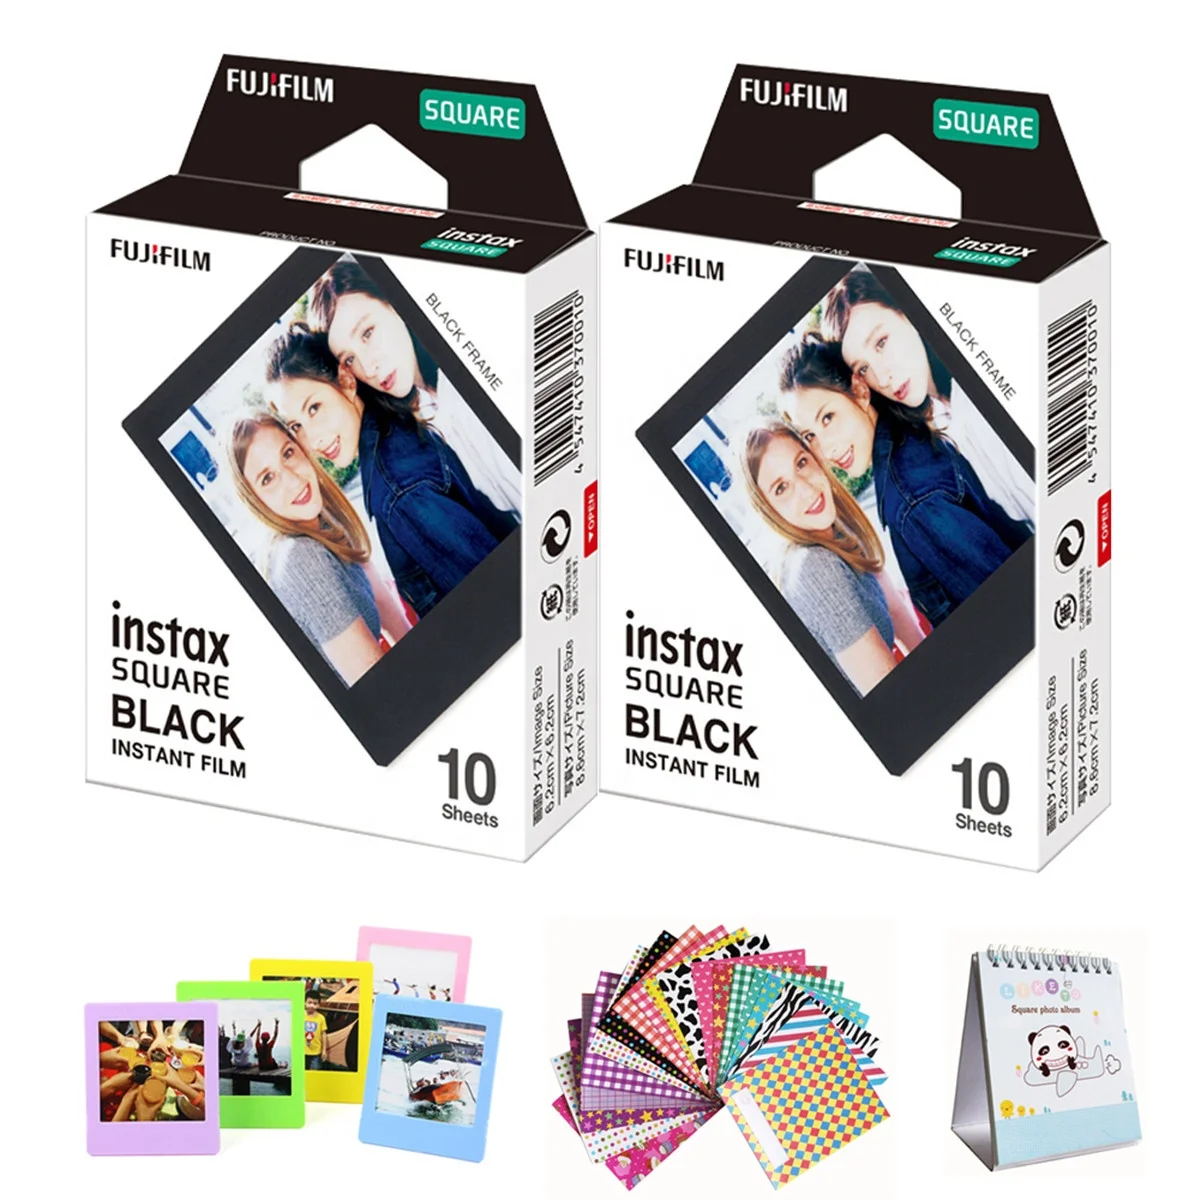 Hardheid ruimte Laboratorium Fujifilm Instax Square Black Film 2 Boxes(10 Photo Sheets Per  Box)compatible With Fujifilm Instax Square Sq6,Sq10 And Sq20 - Buy Instax  Film,Instax Instant,Instax Square Film Product on Alibaba.com